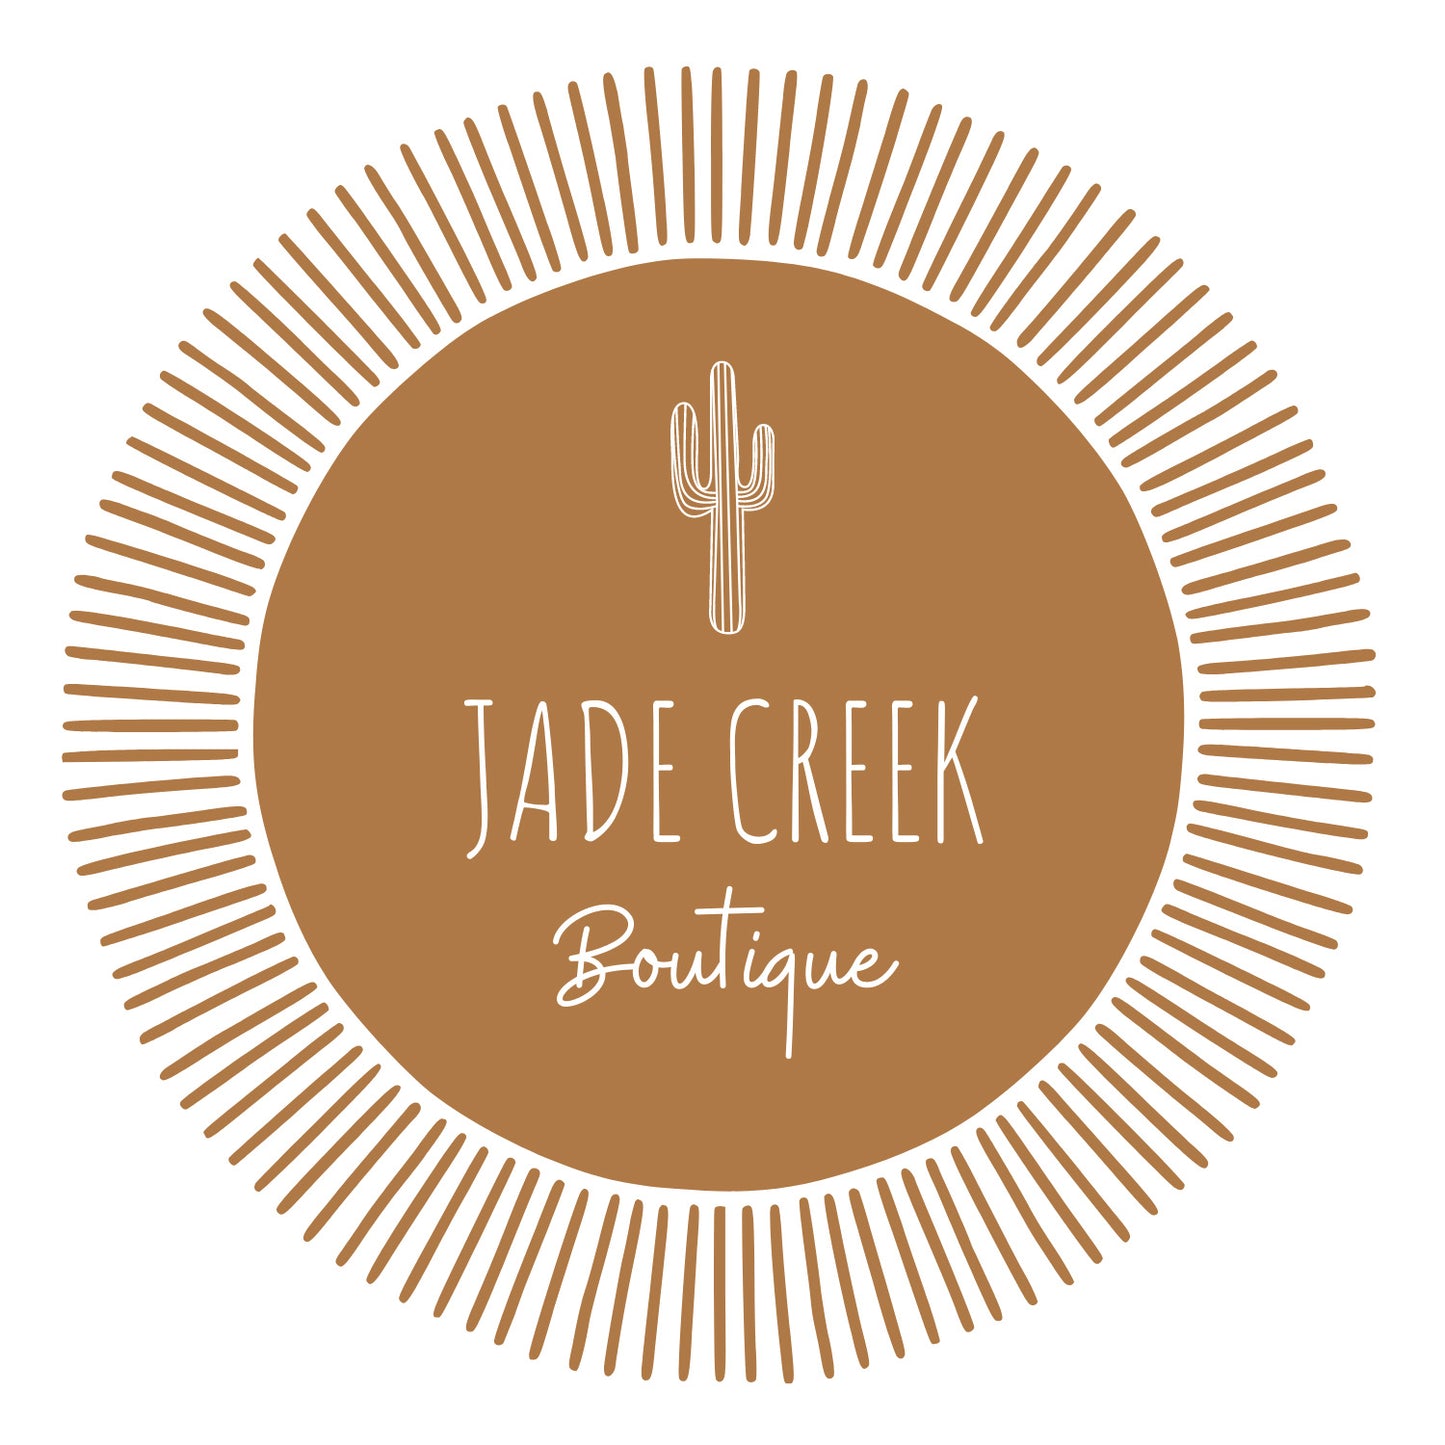 Gift Certificate - Jade Creek Boutique